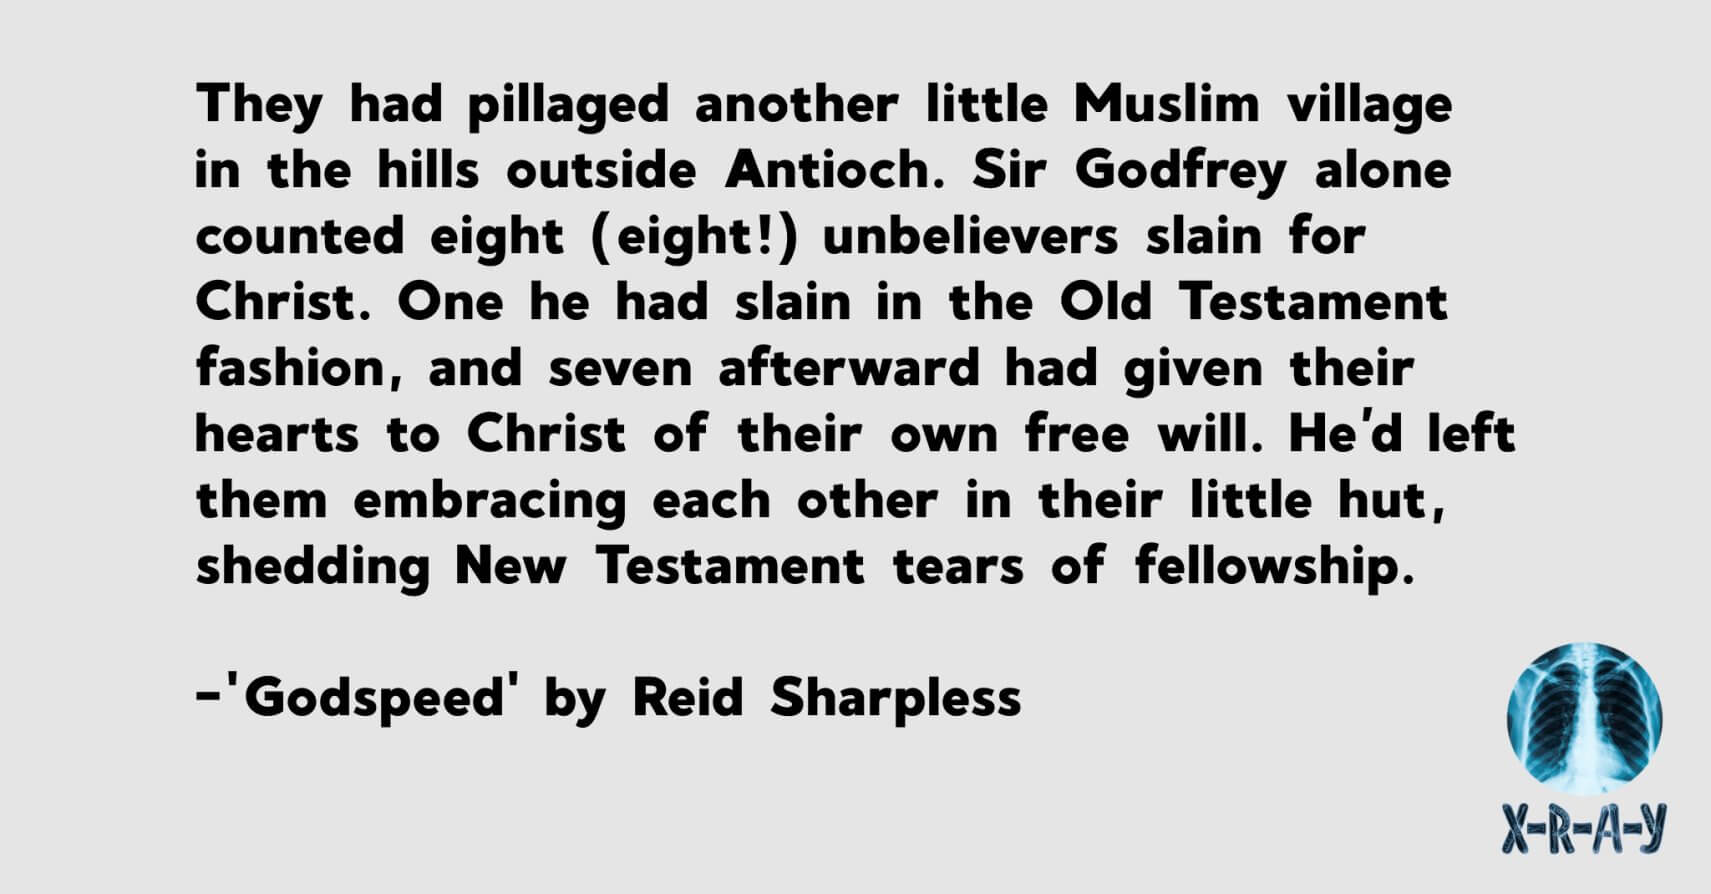 GODSPEED by Reid Sharpless